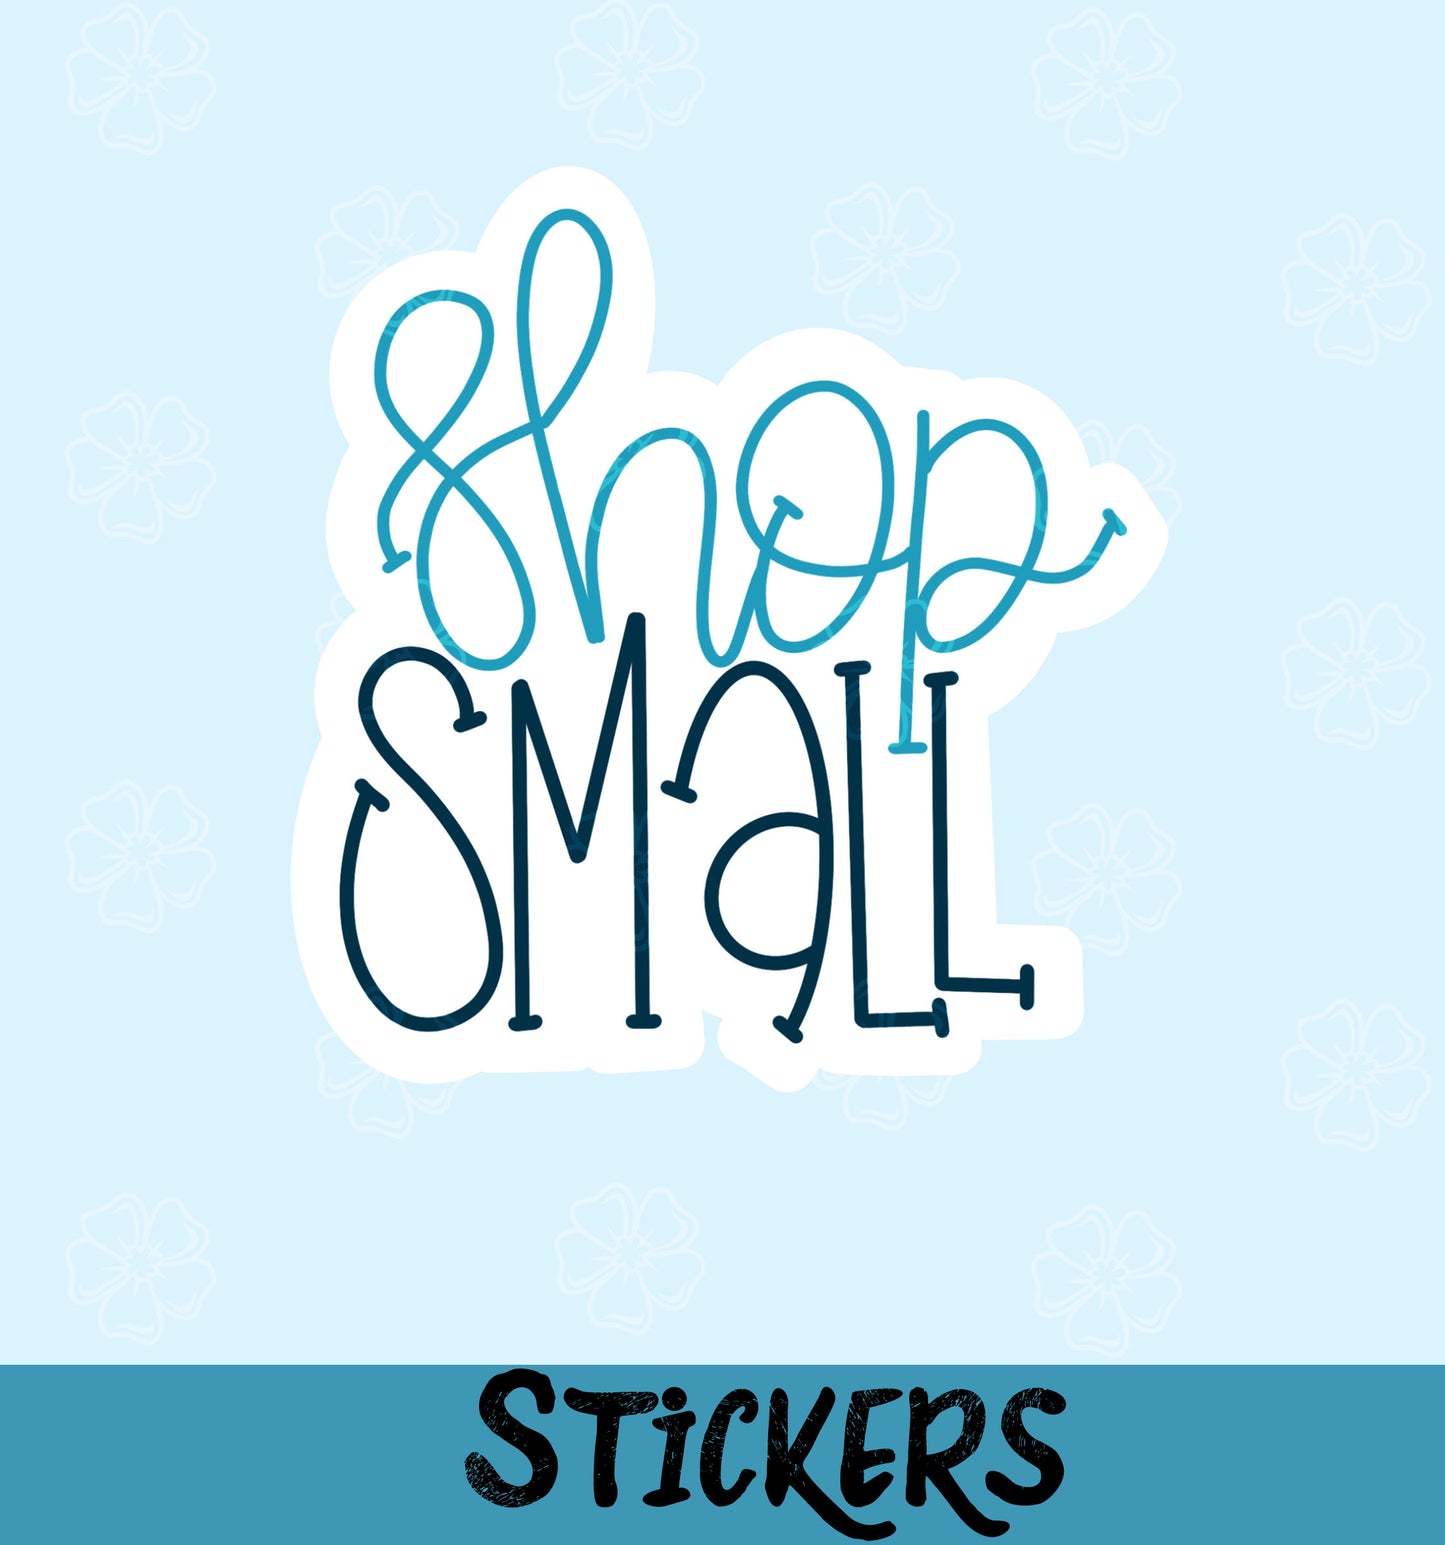 Shop Small #8